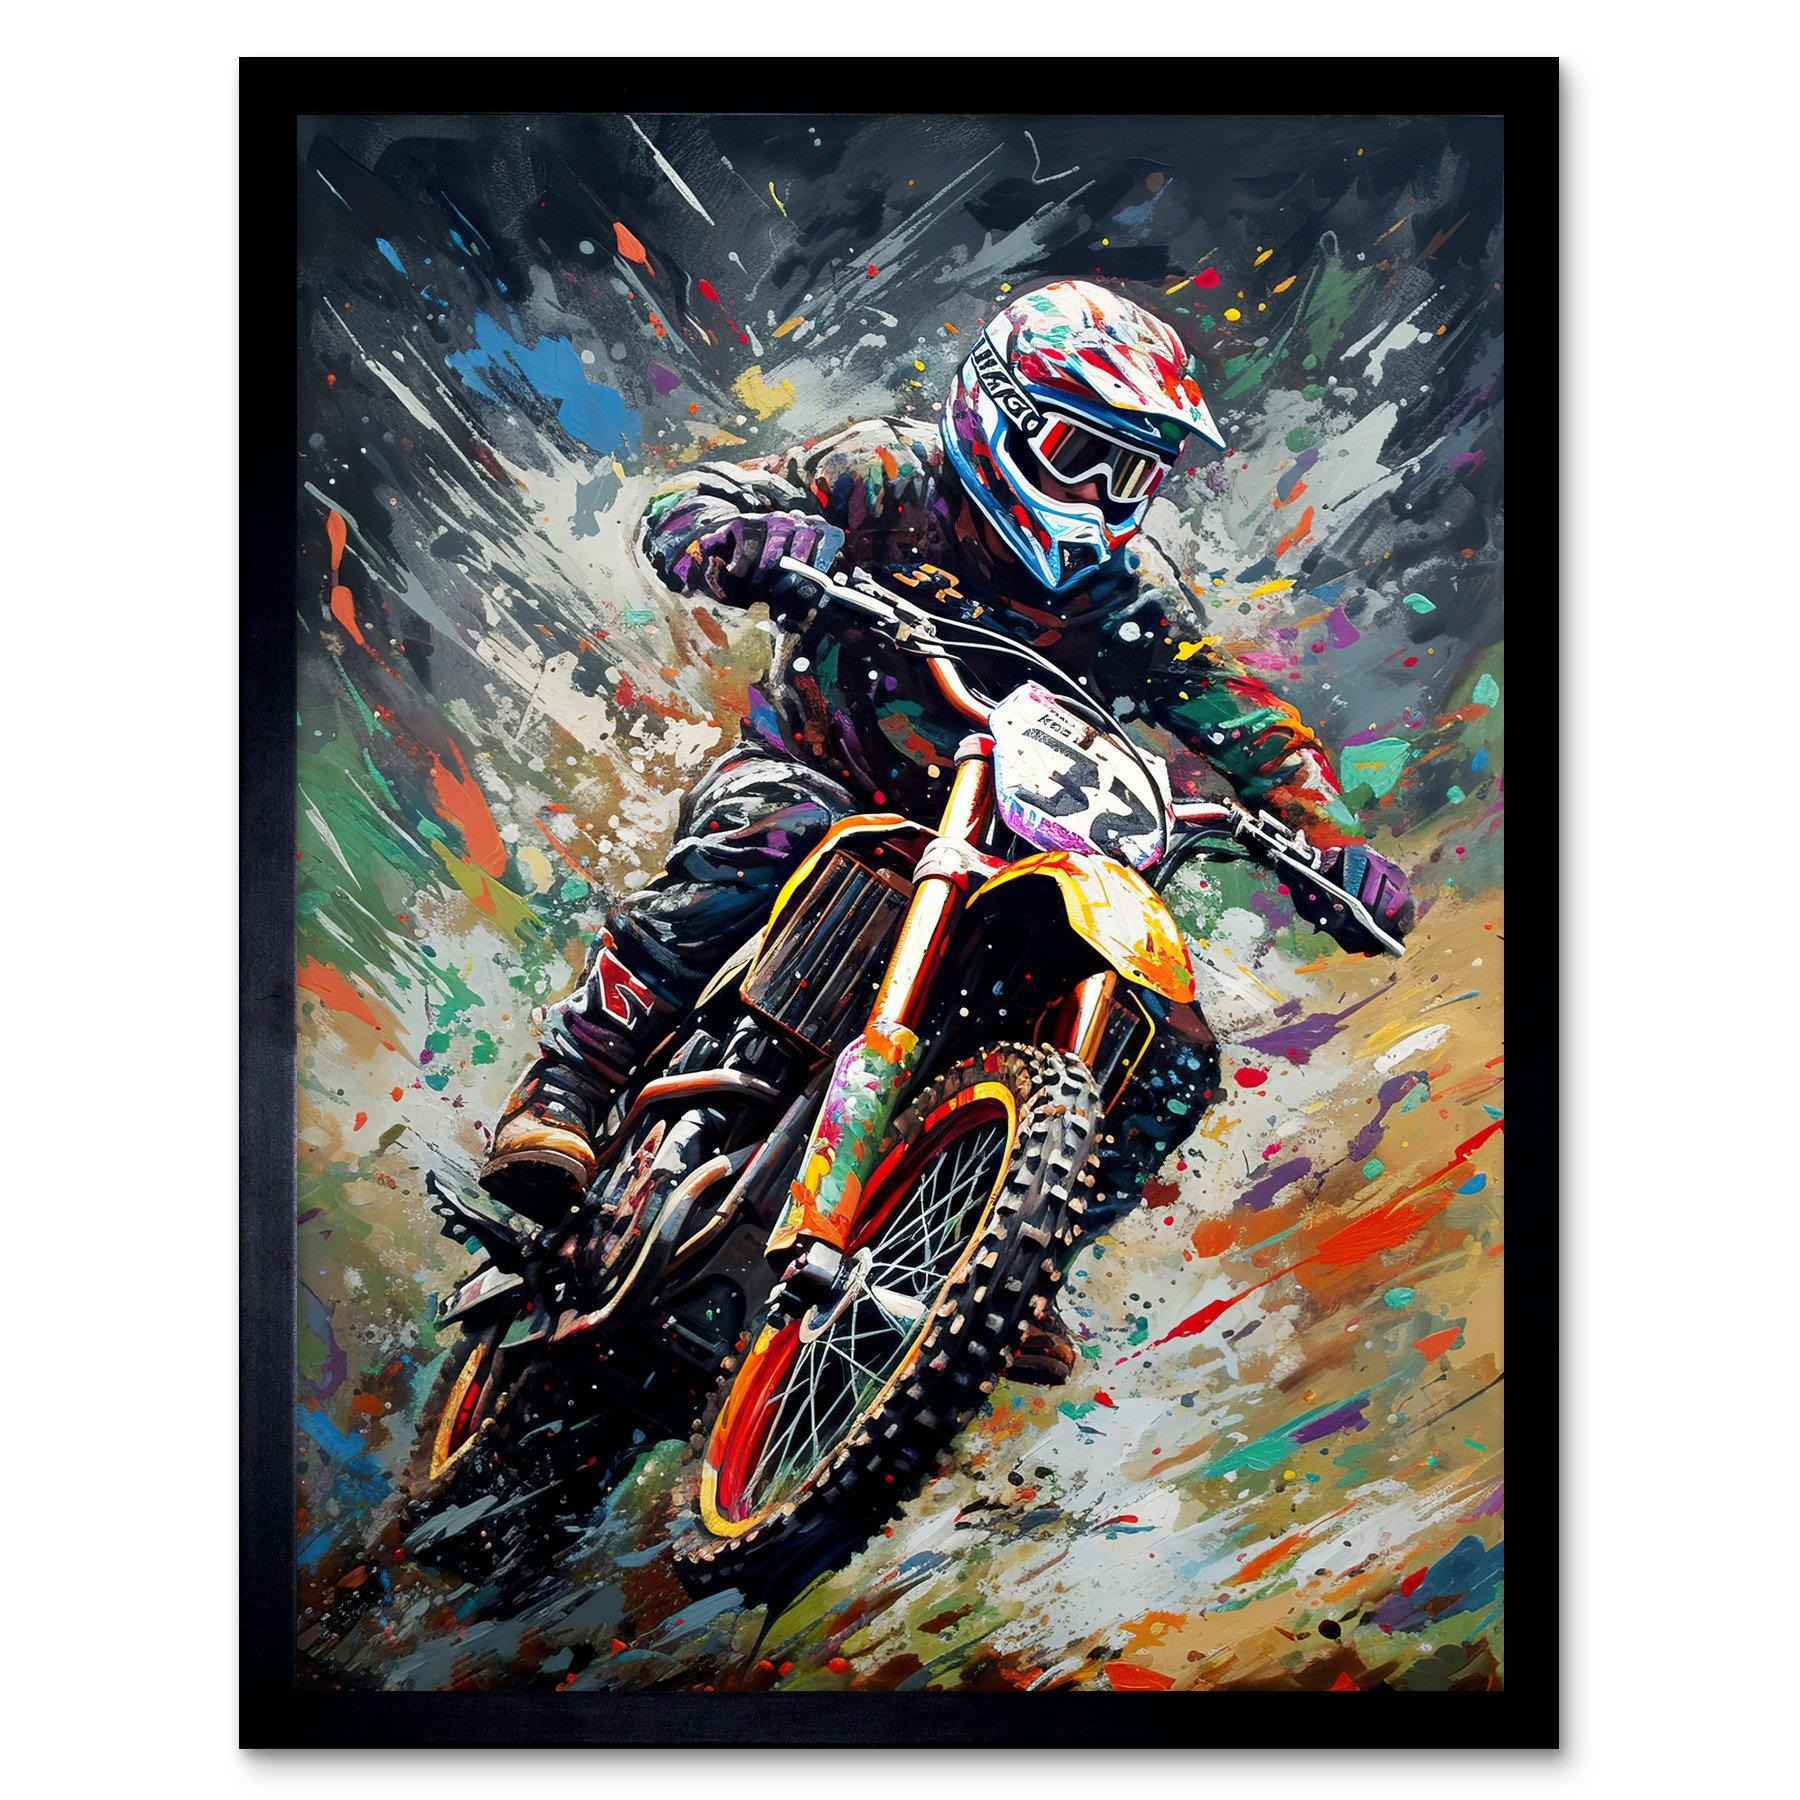 Wall Art Print Motocross Race Action Shot Paint Splat Portrait Art Framed - image 1